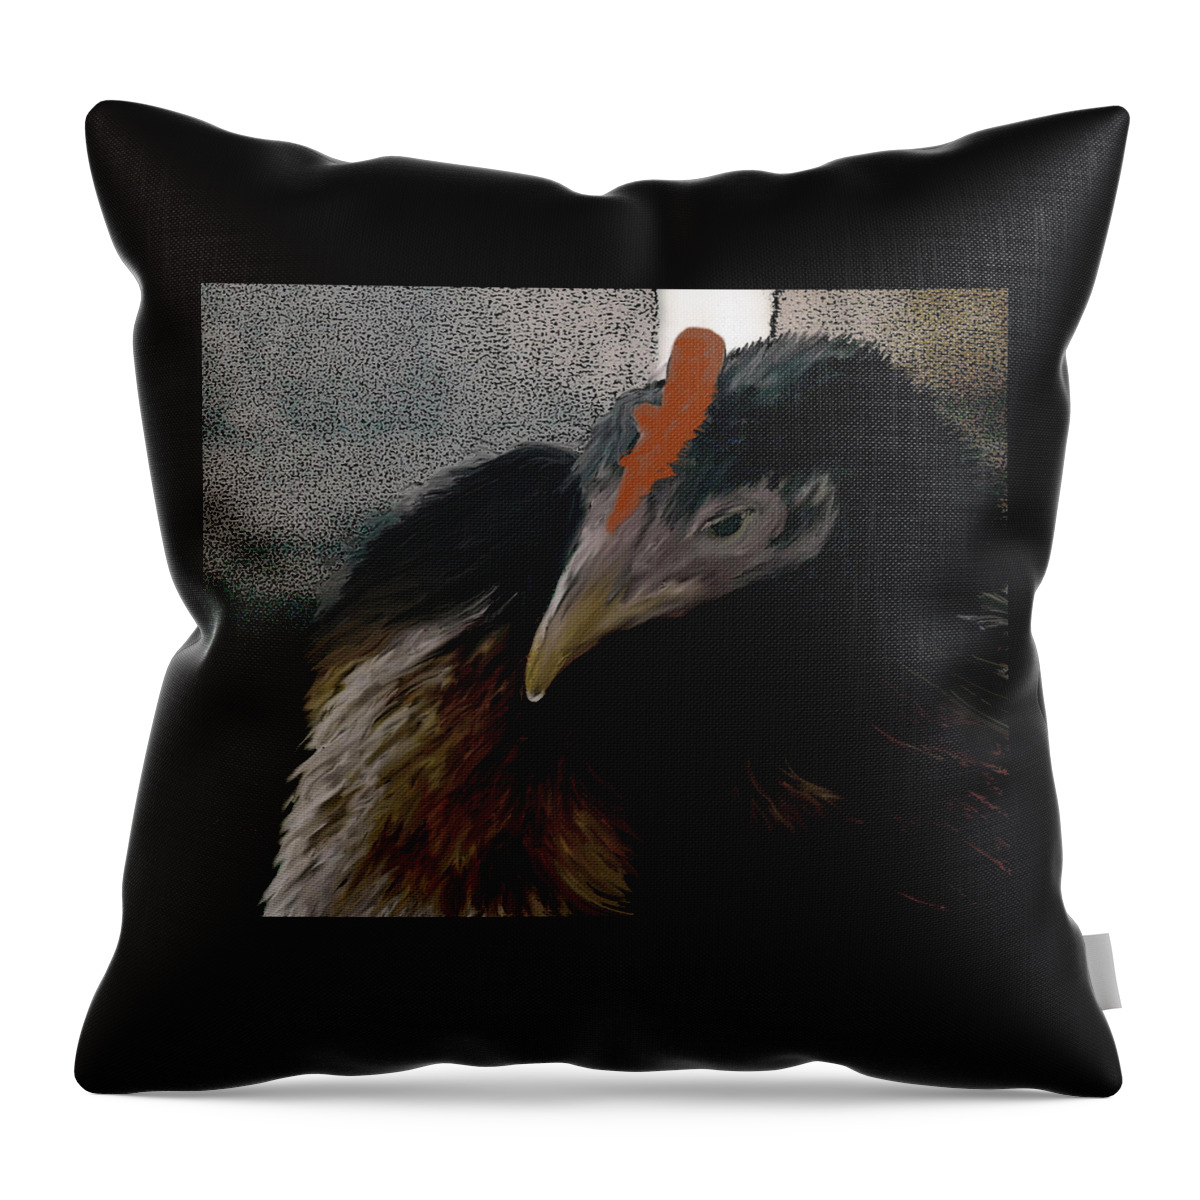 Chicken Throw Pillow featuring the digital art Cluck by Lesa Fine